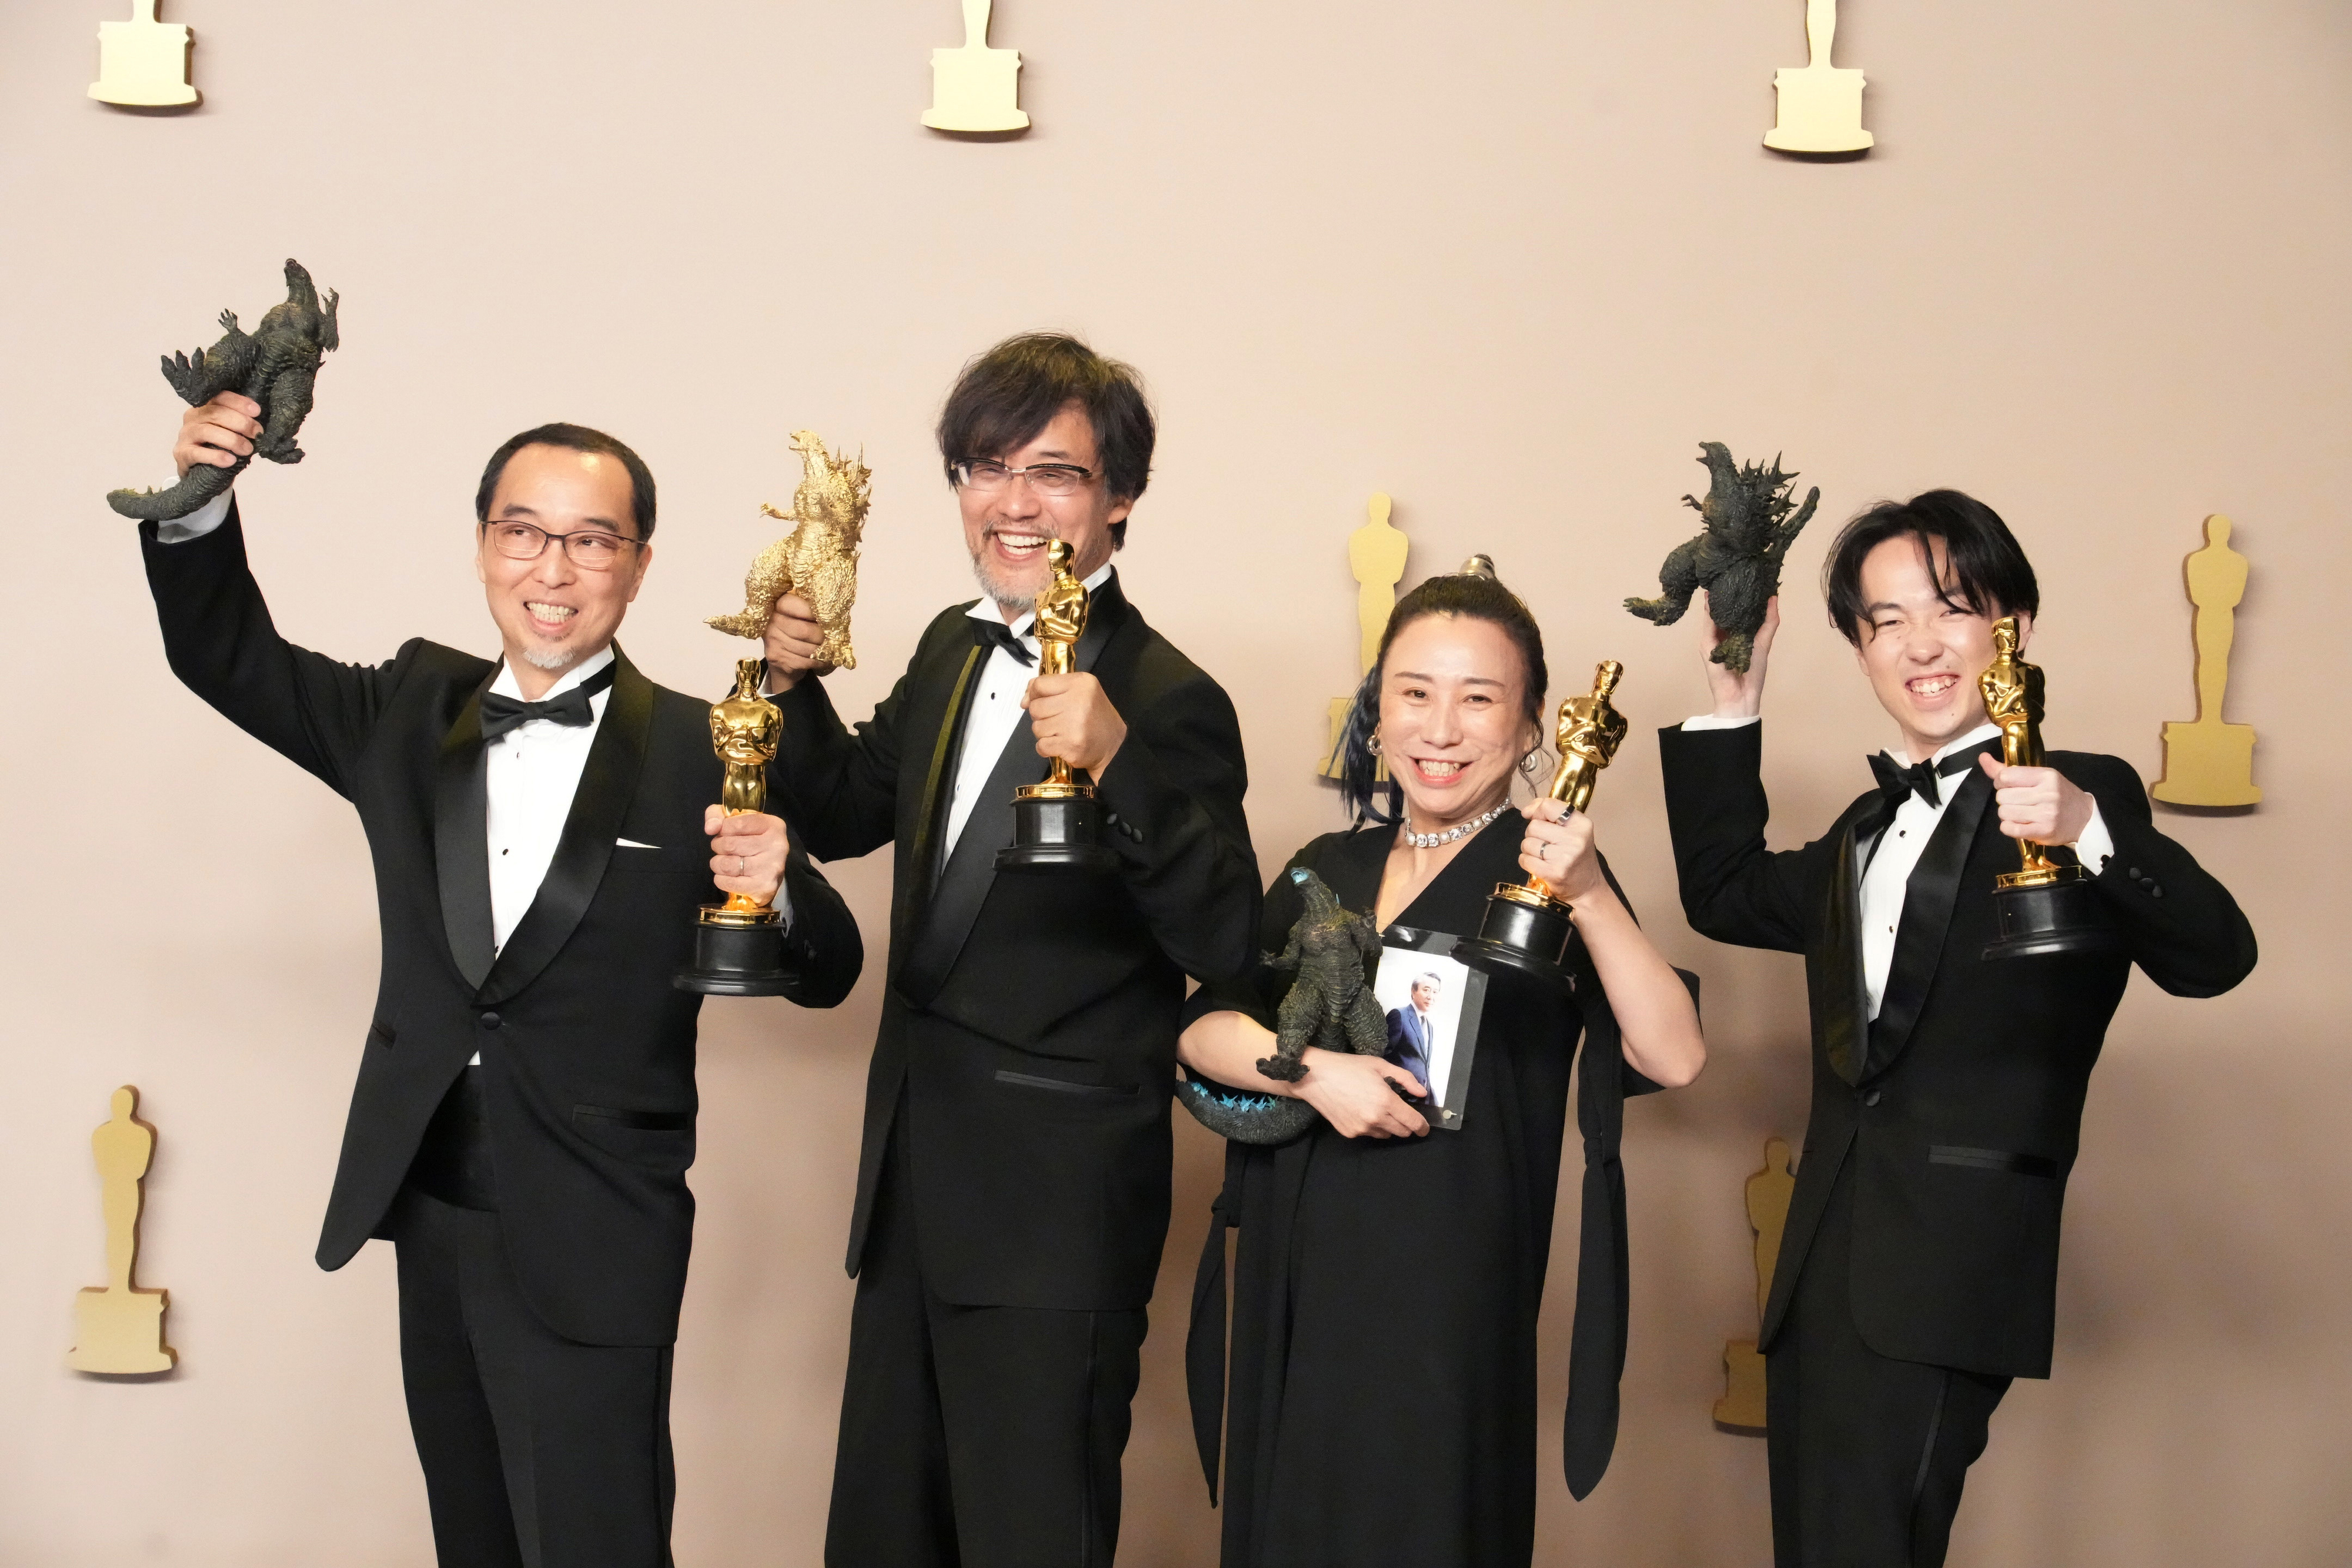 Masaki Takahashi, Takashi Yamazaki, Kiyoko Shibuya, and Tatsuji Nojima smile and pose with Oscars and Godzilla toys